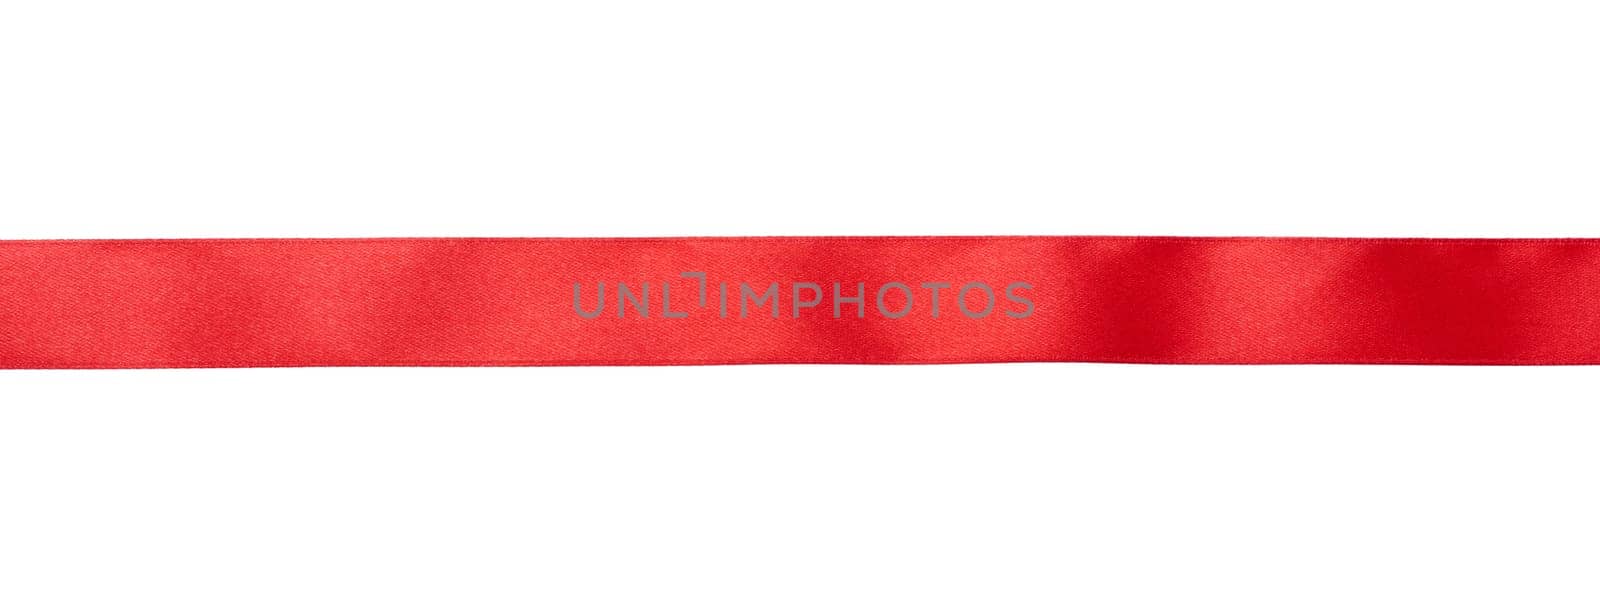 Red shiny ribbon on white isolated background